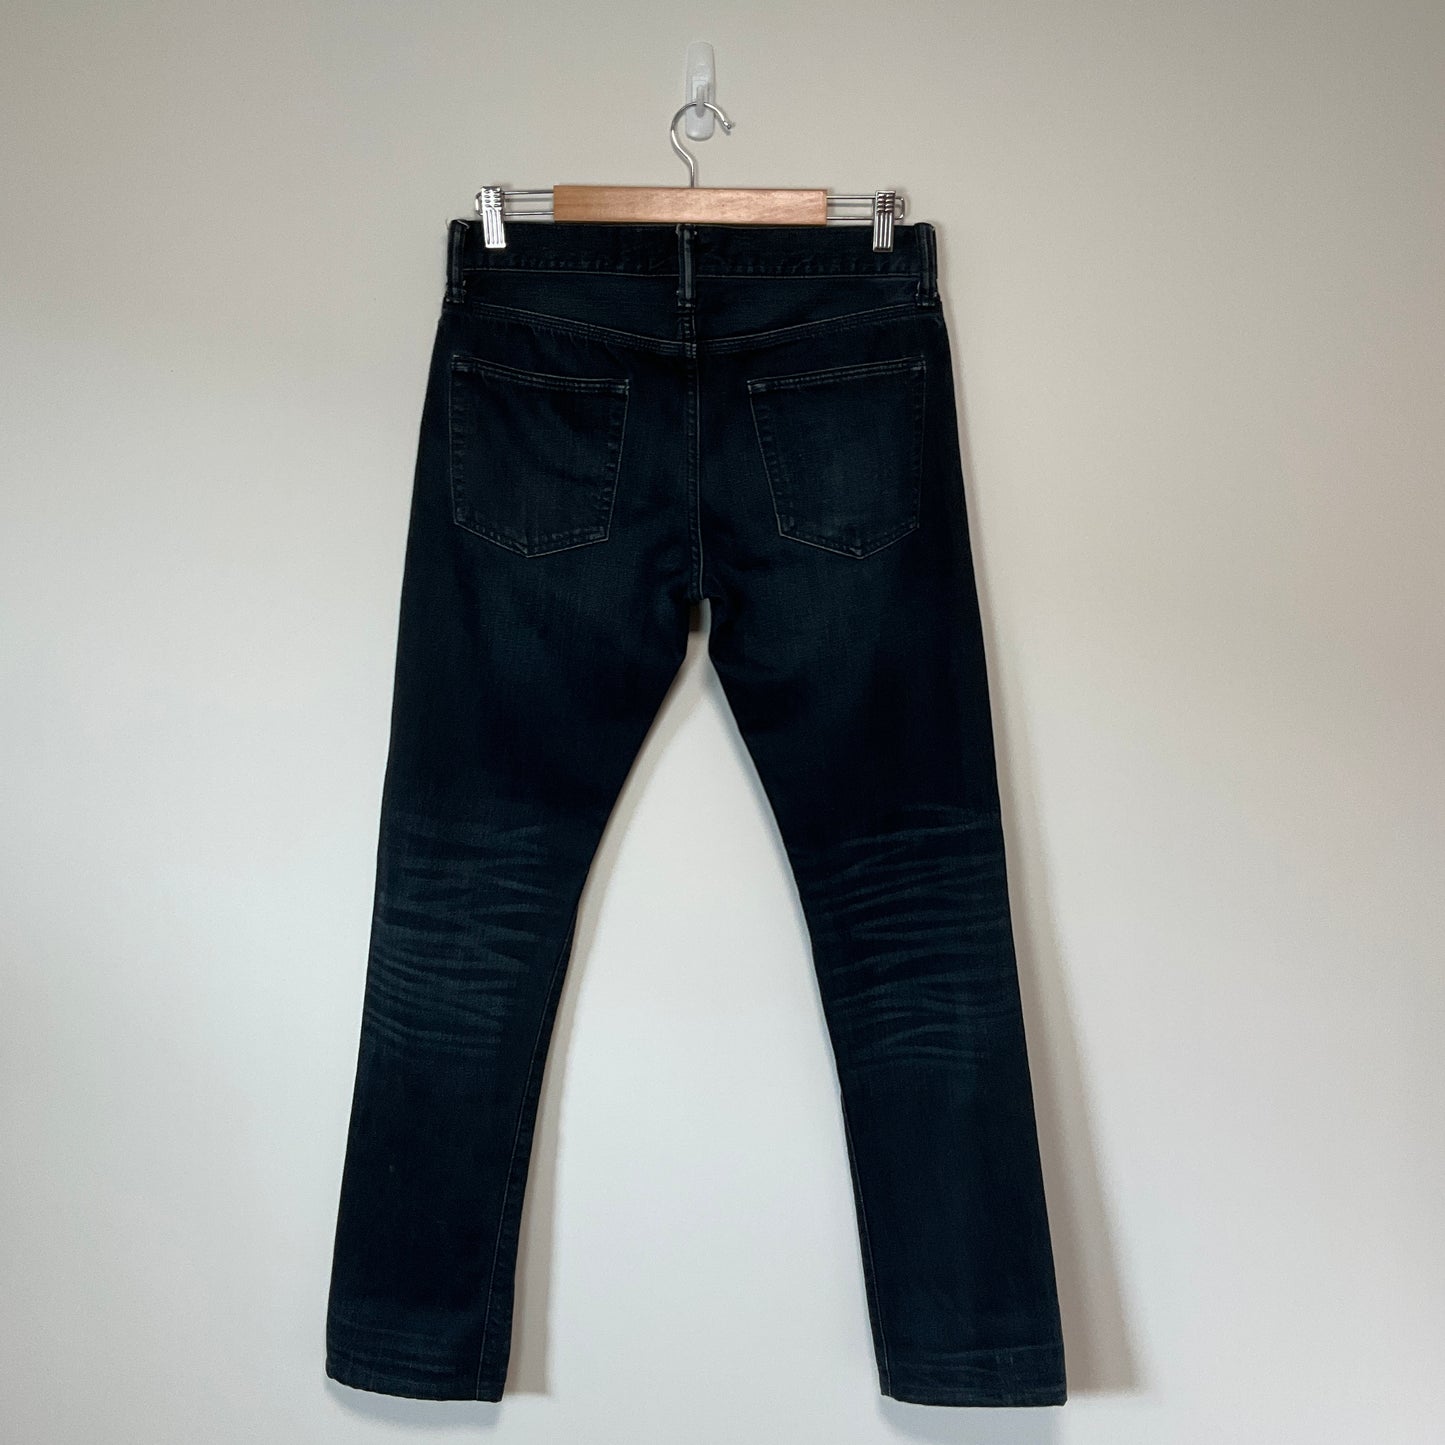 John Elliot x Gap - Dark Wash Skinny Jeans